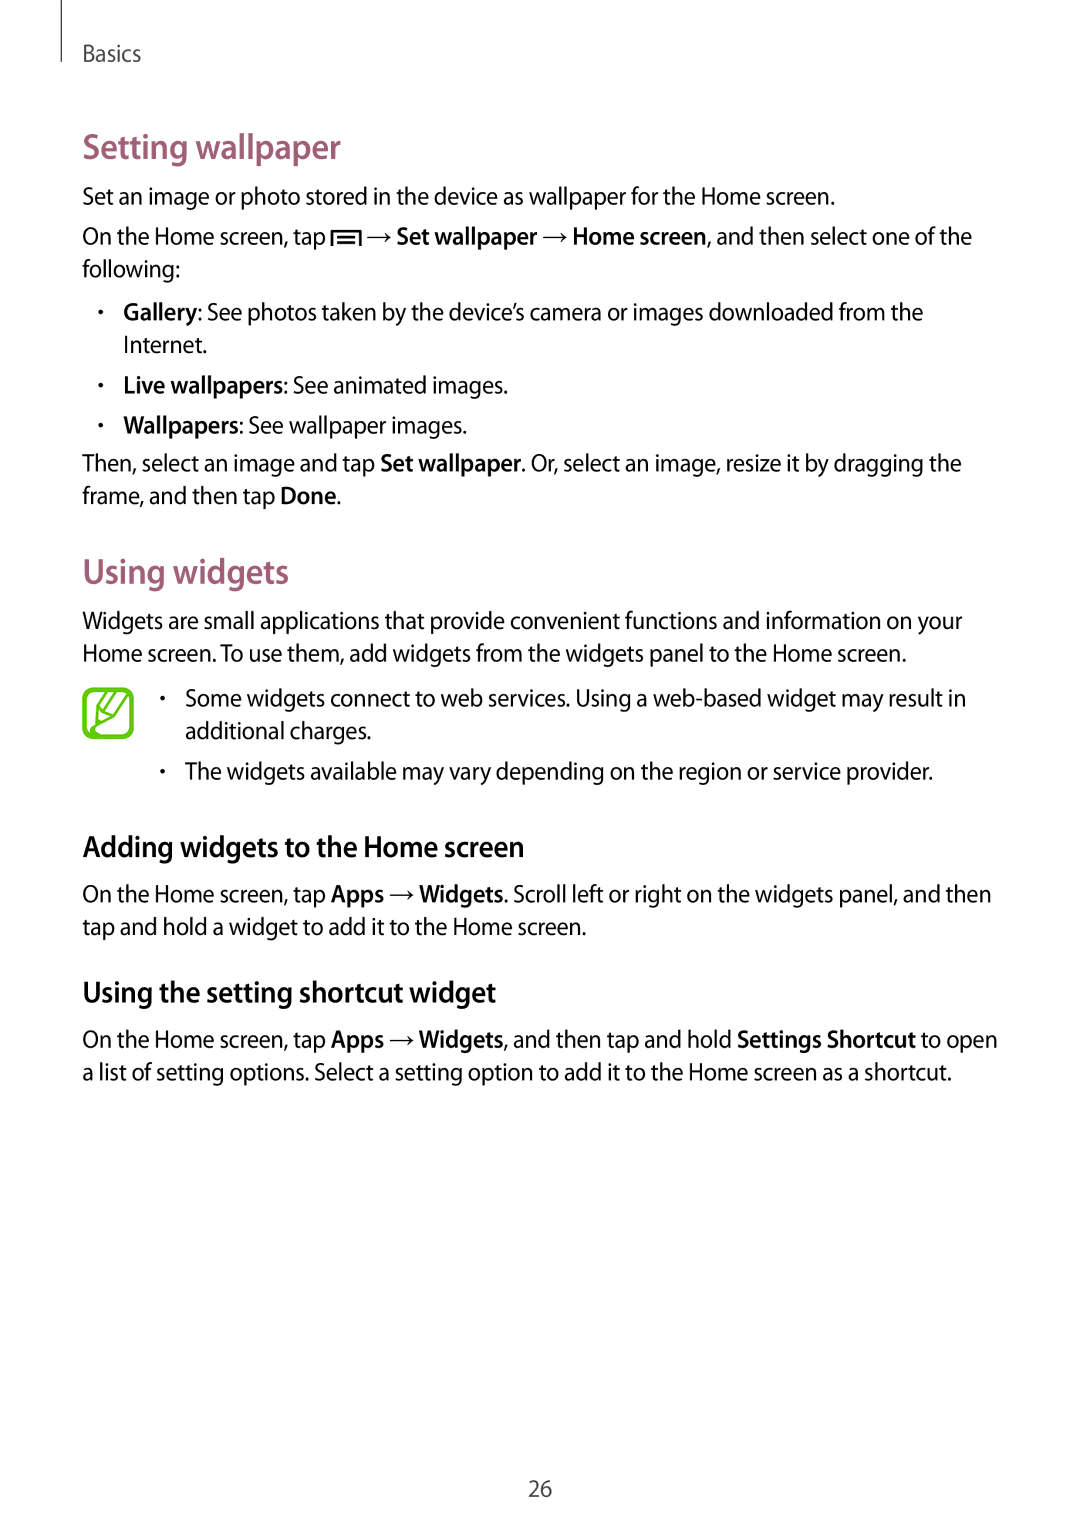 Samsung SM-T310 Setting wallpaper, Using widgets, Adding widgets to the Home screen, Using the setting shortcut widget 